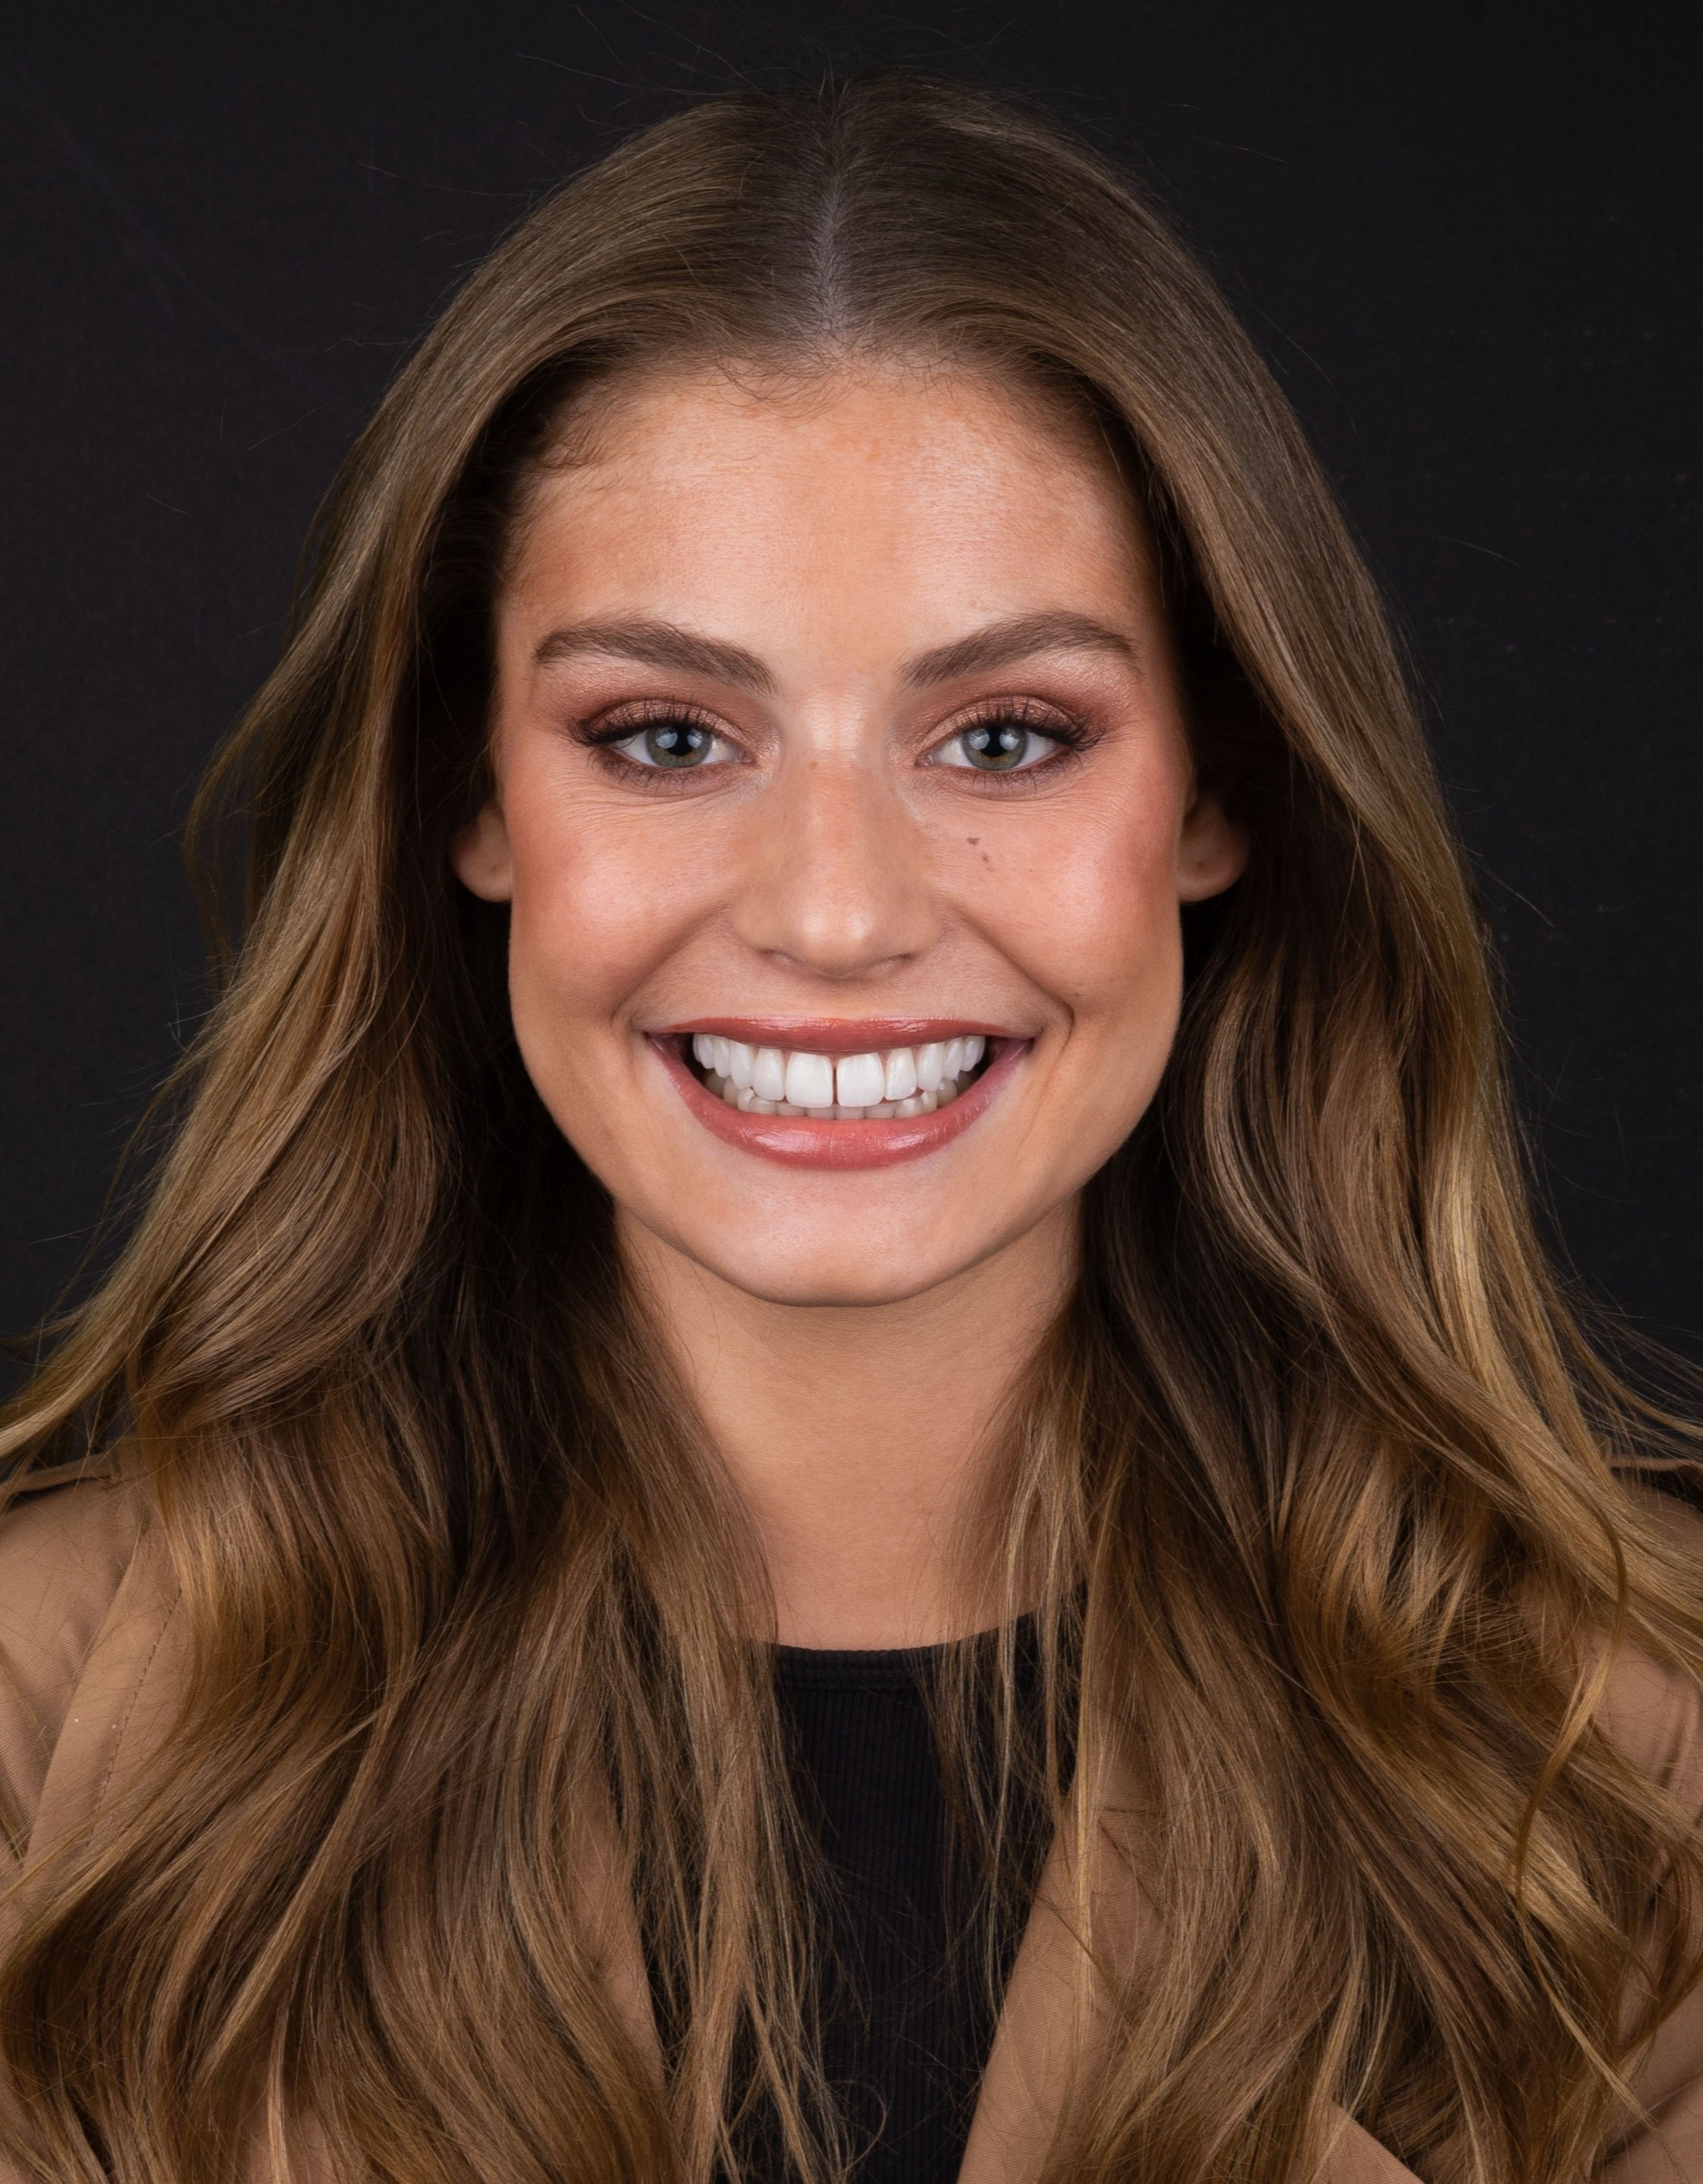 Moraya Wilson Miss Universe Australia before and after Pircasso Porcelain Veneers at Vogue Dental Studios 